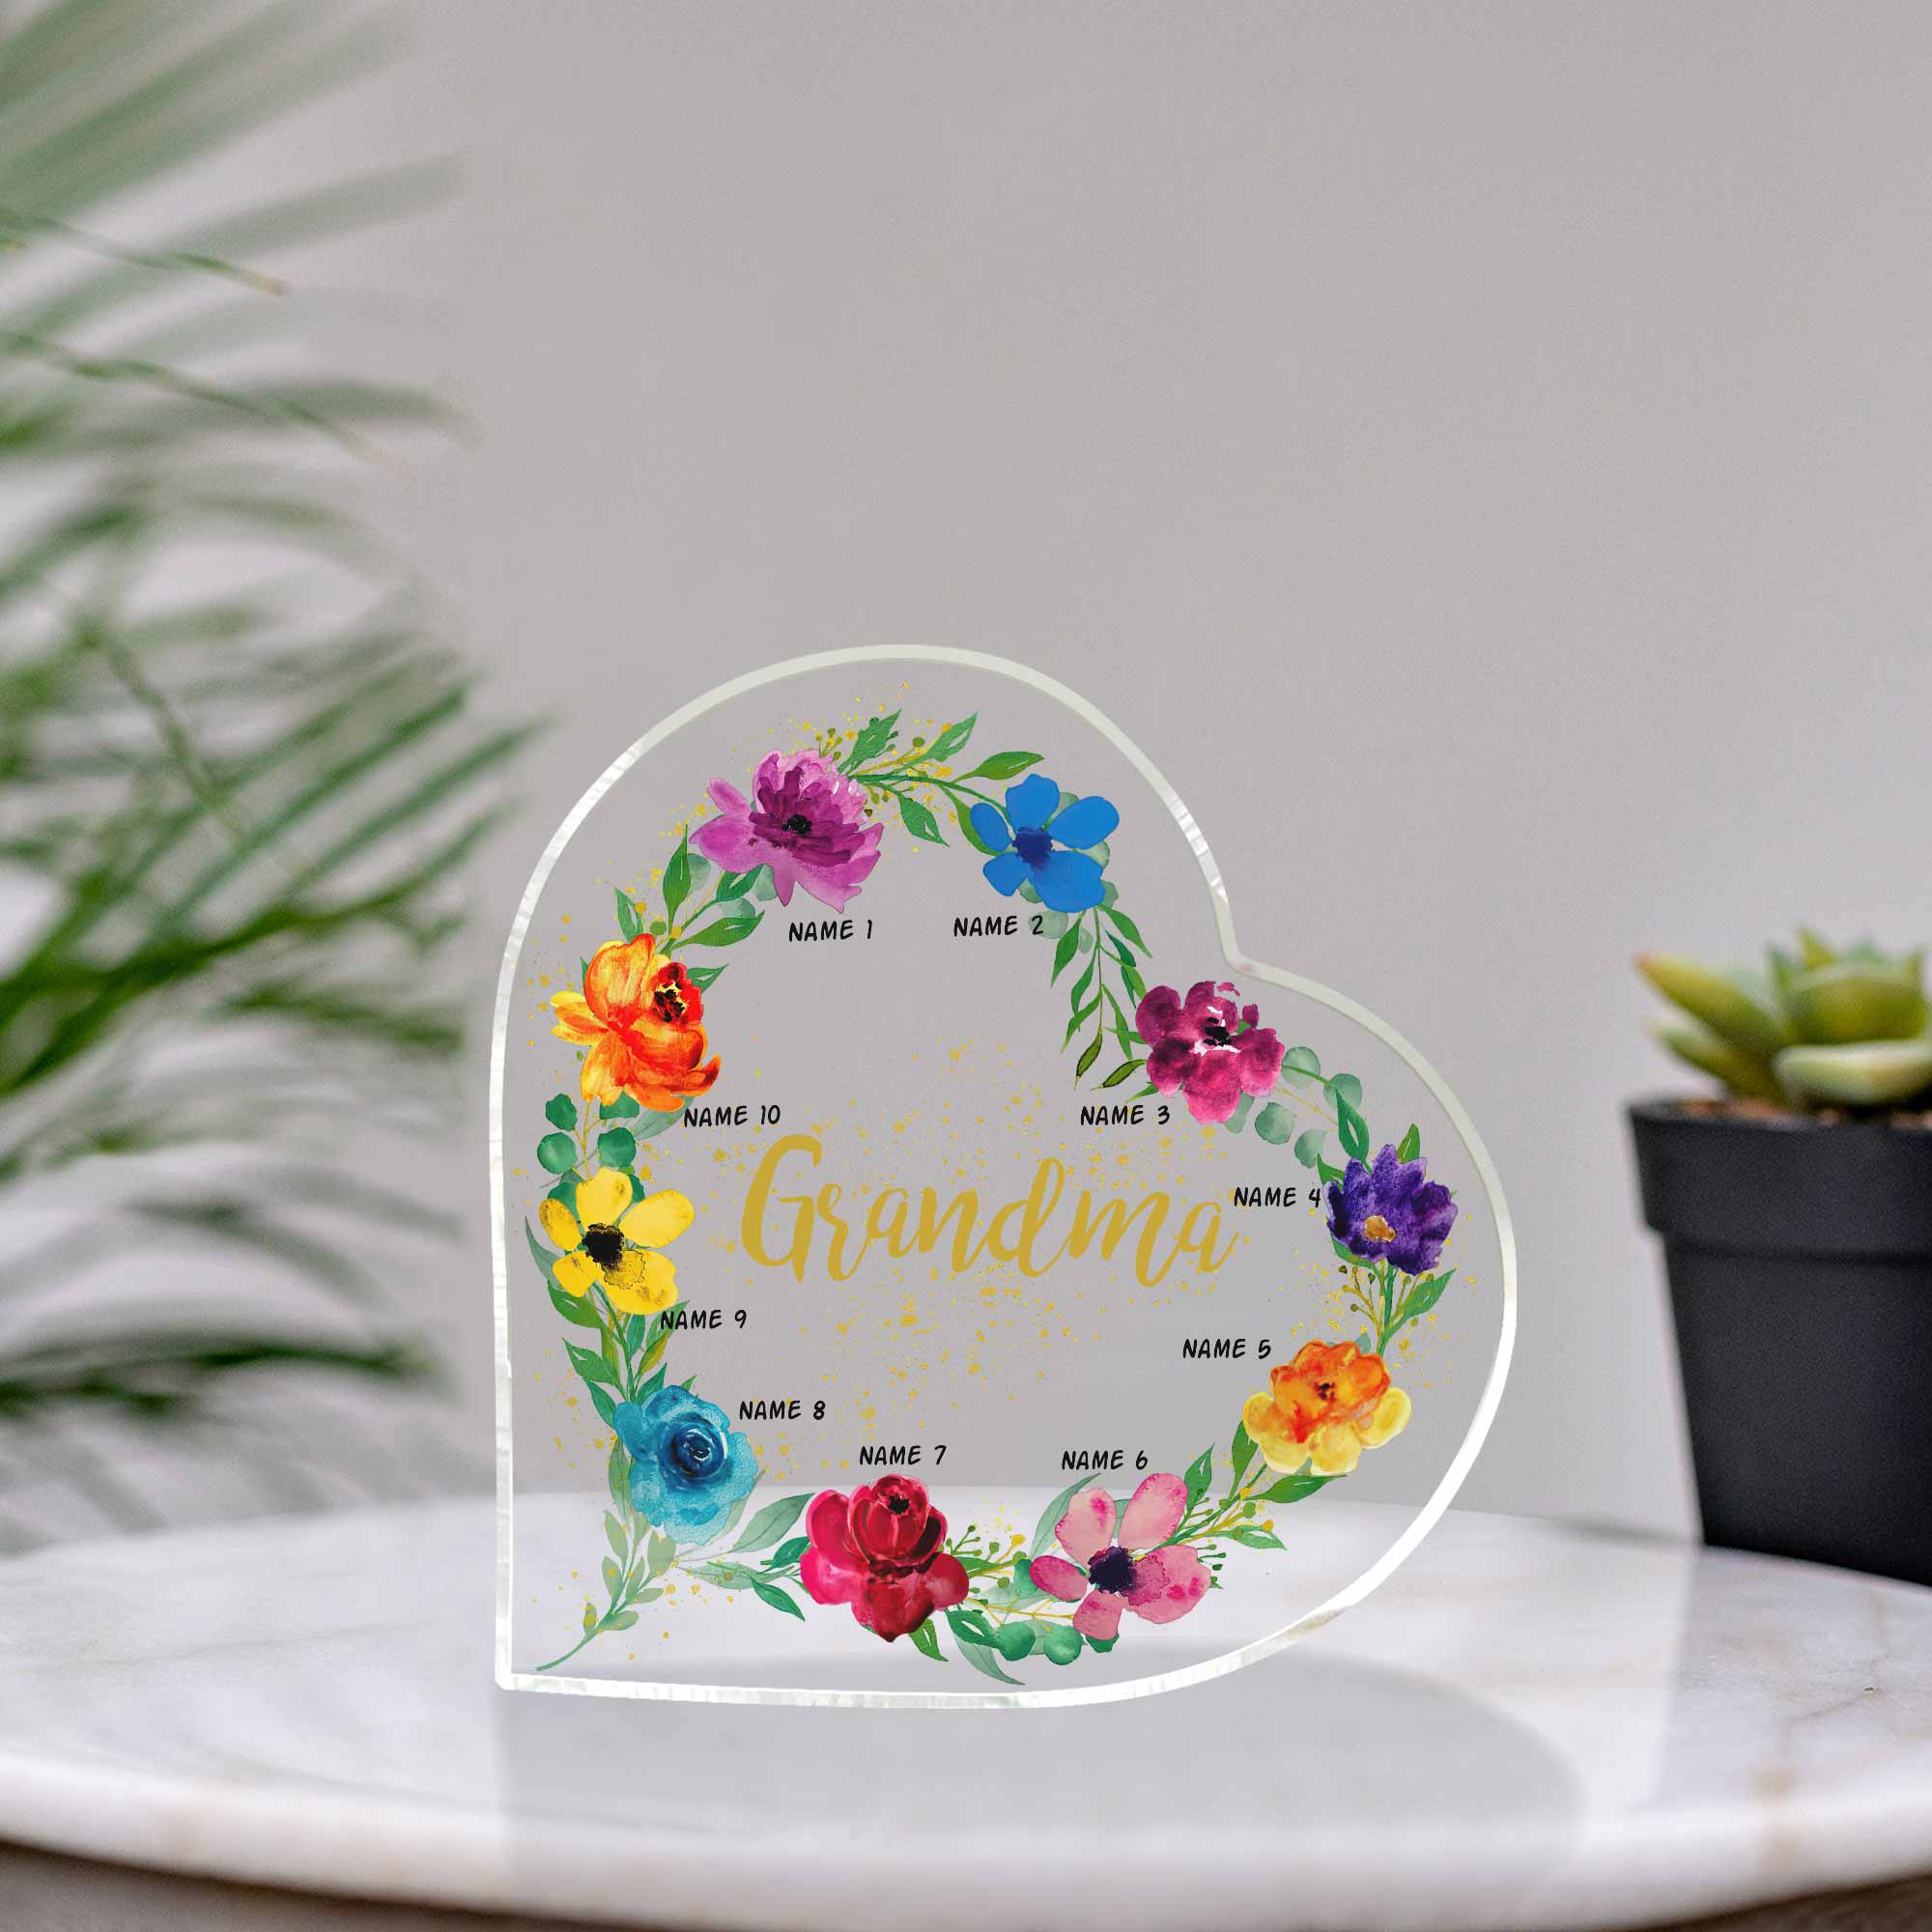 Grandma - Personalized Grandma Custom Shaped Acrylic Plaque